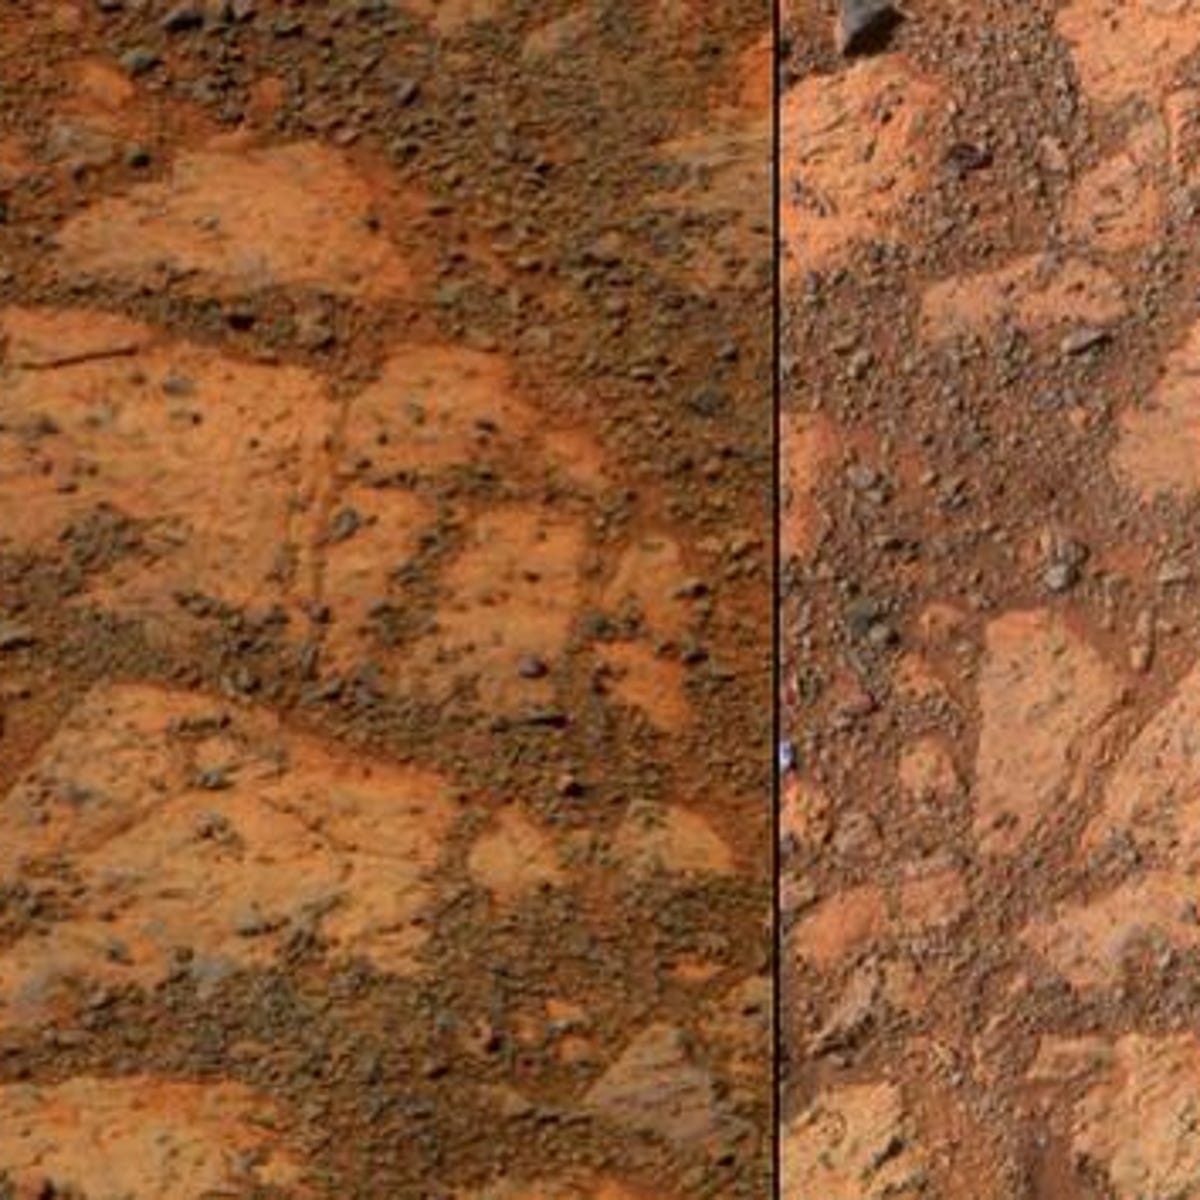 Mars 'jelly doughnut' mystery finally solved - CNET